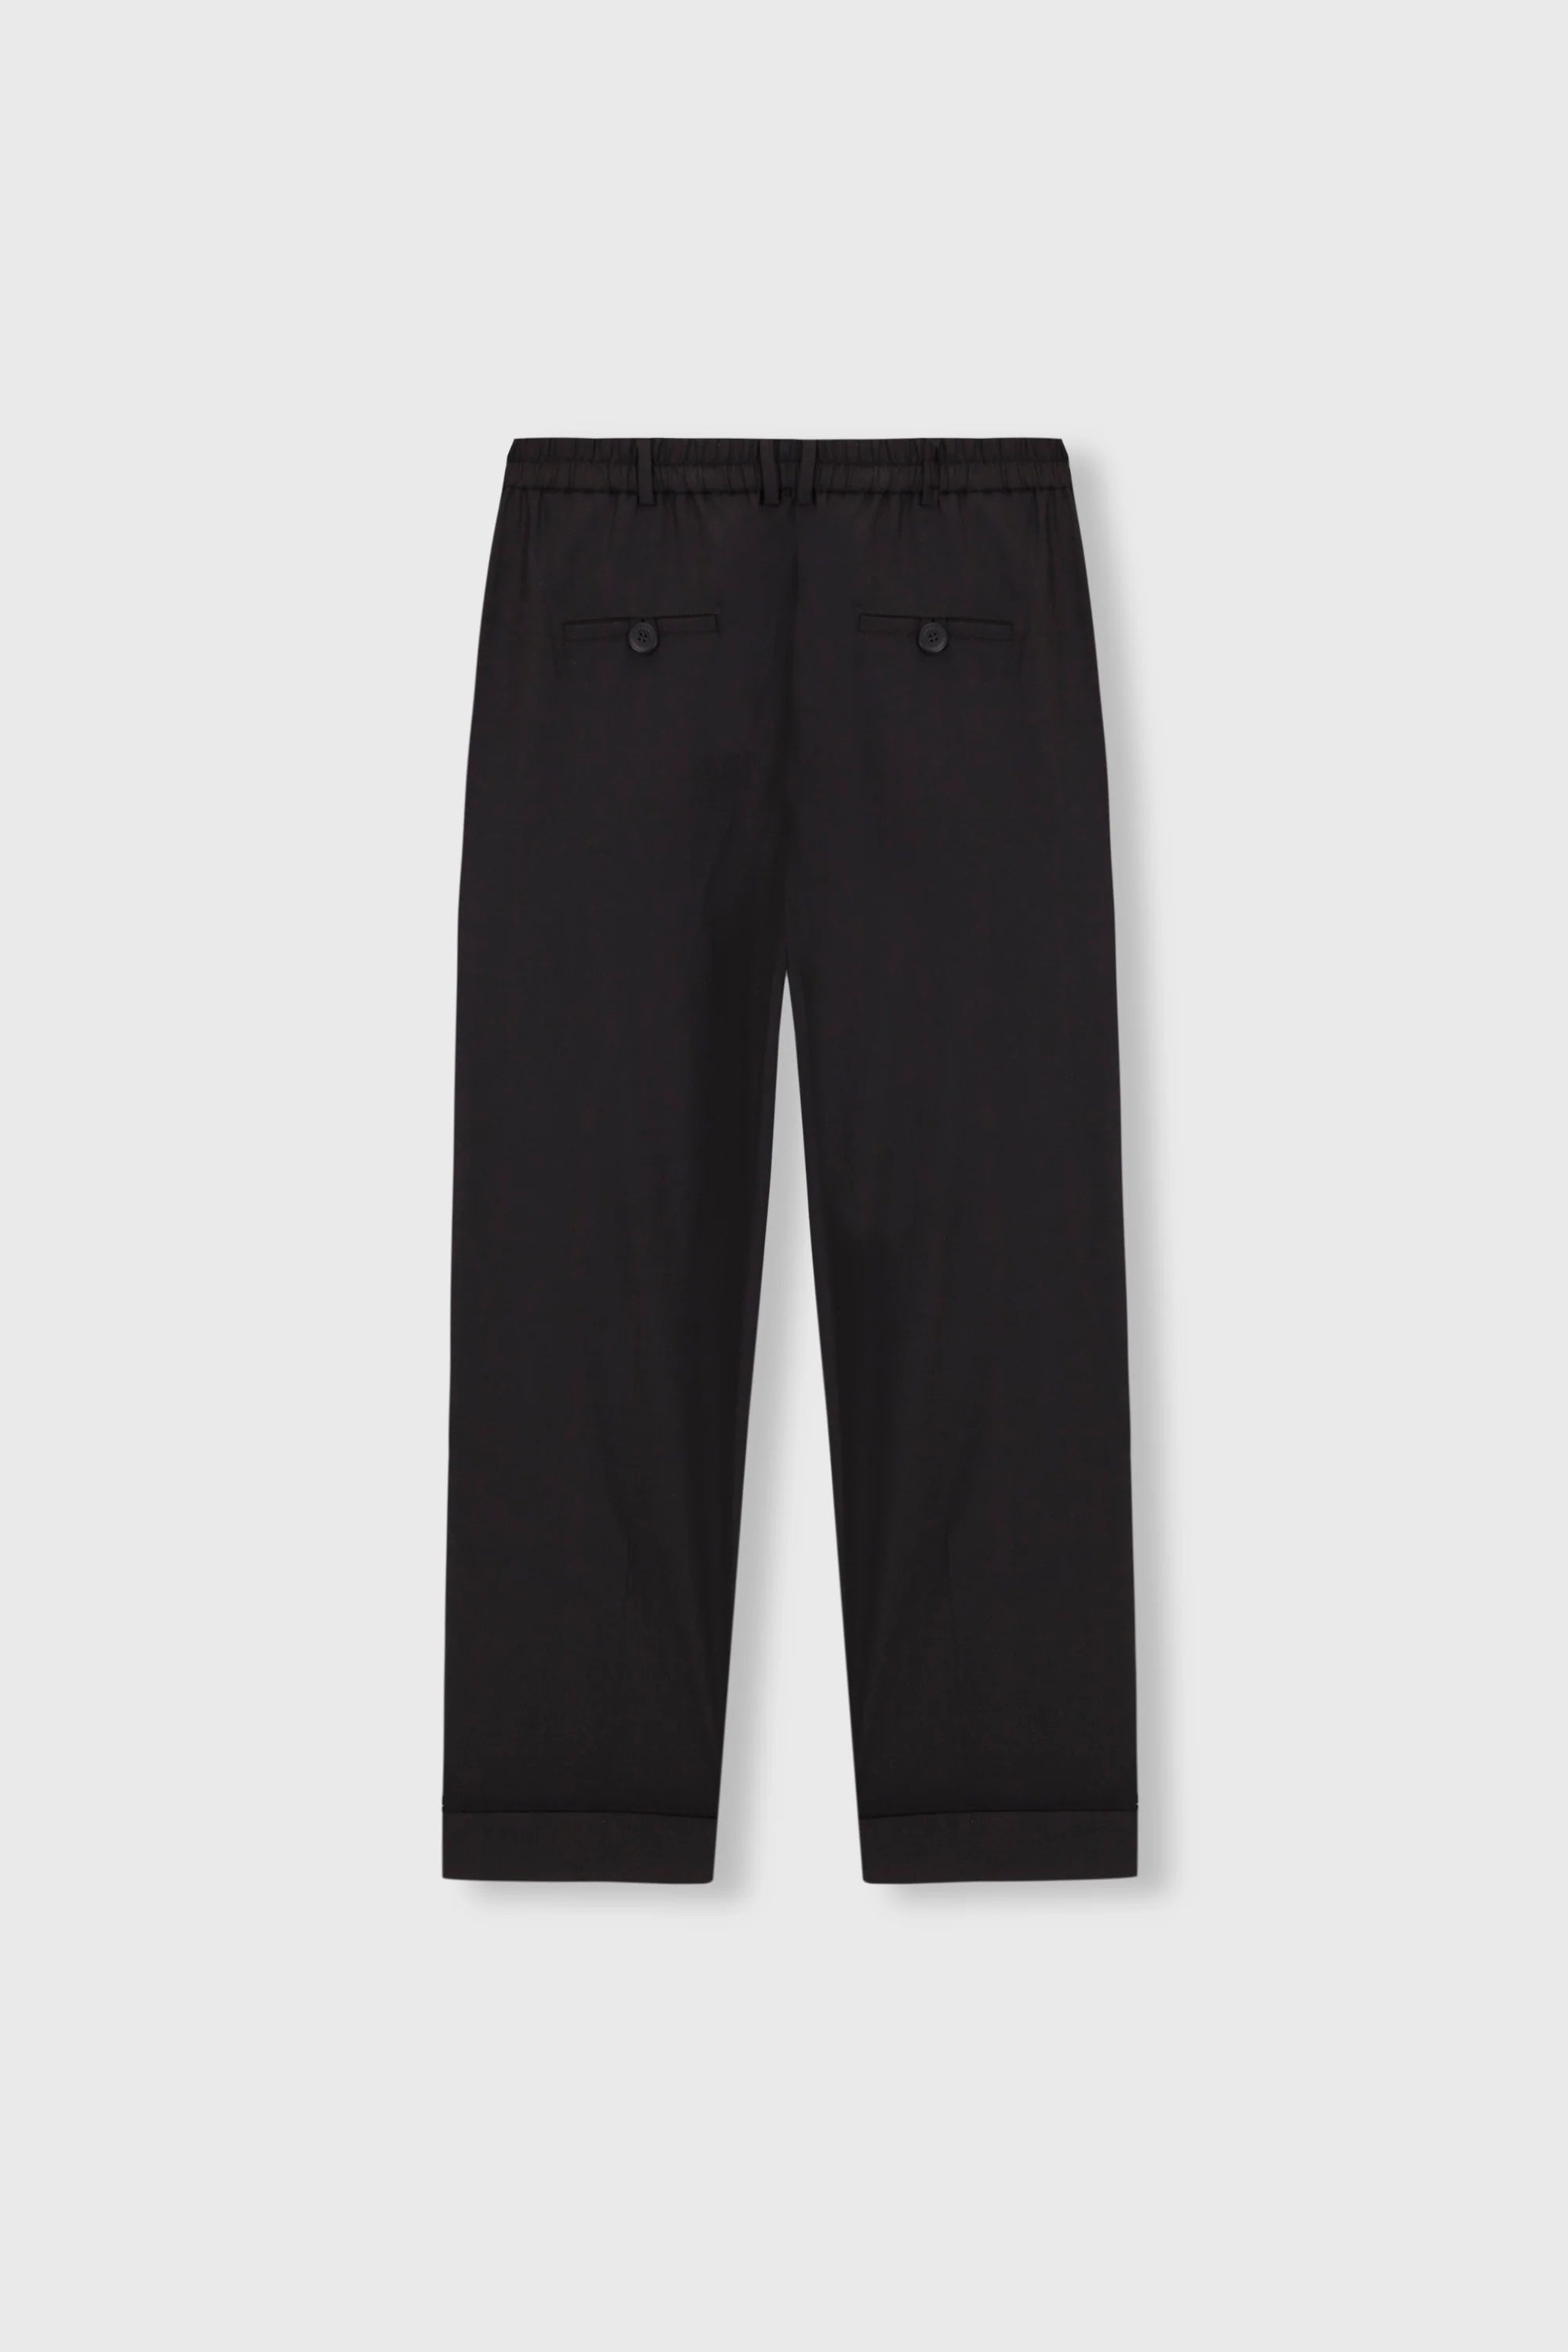 Cordera SS23 Tailoring Masculine Pant / Black